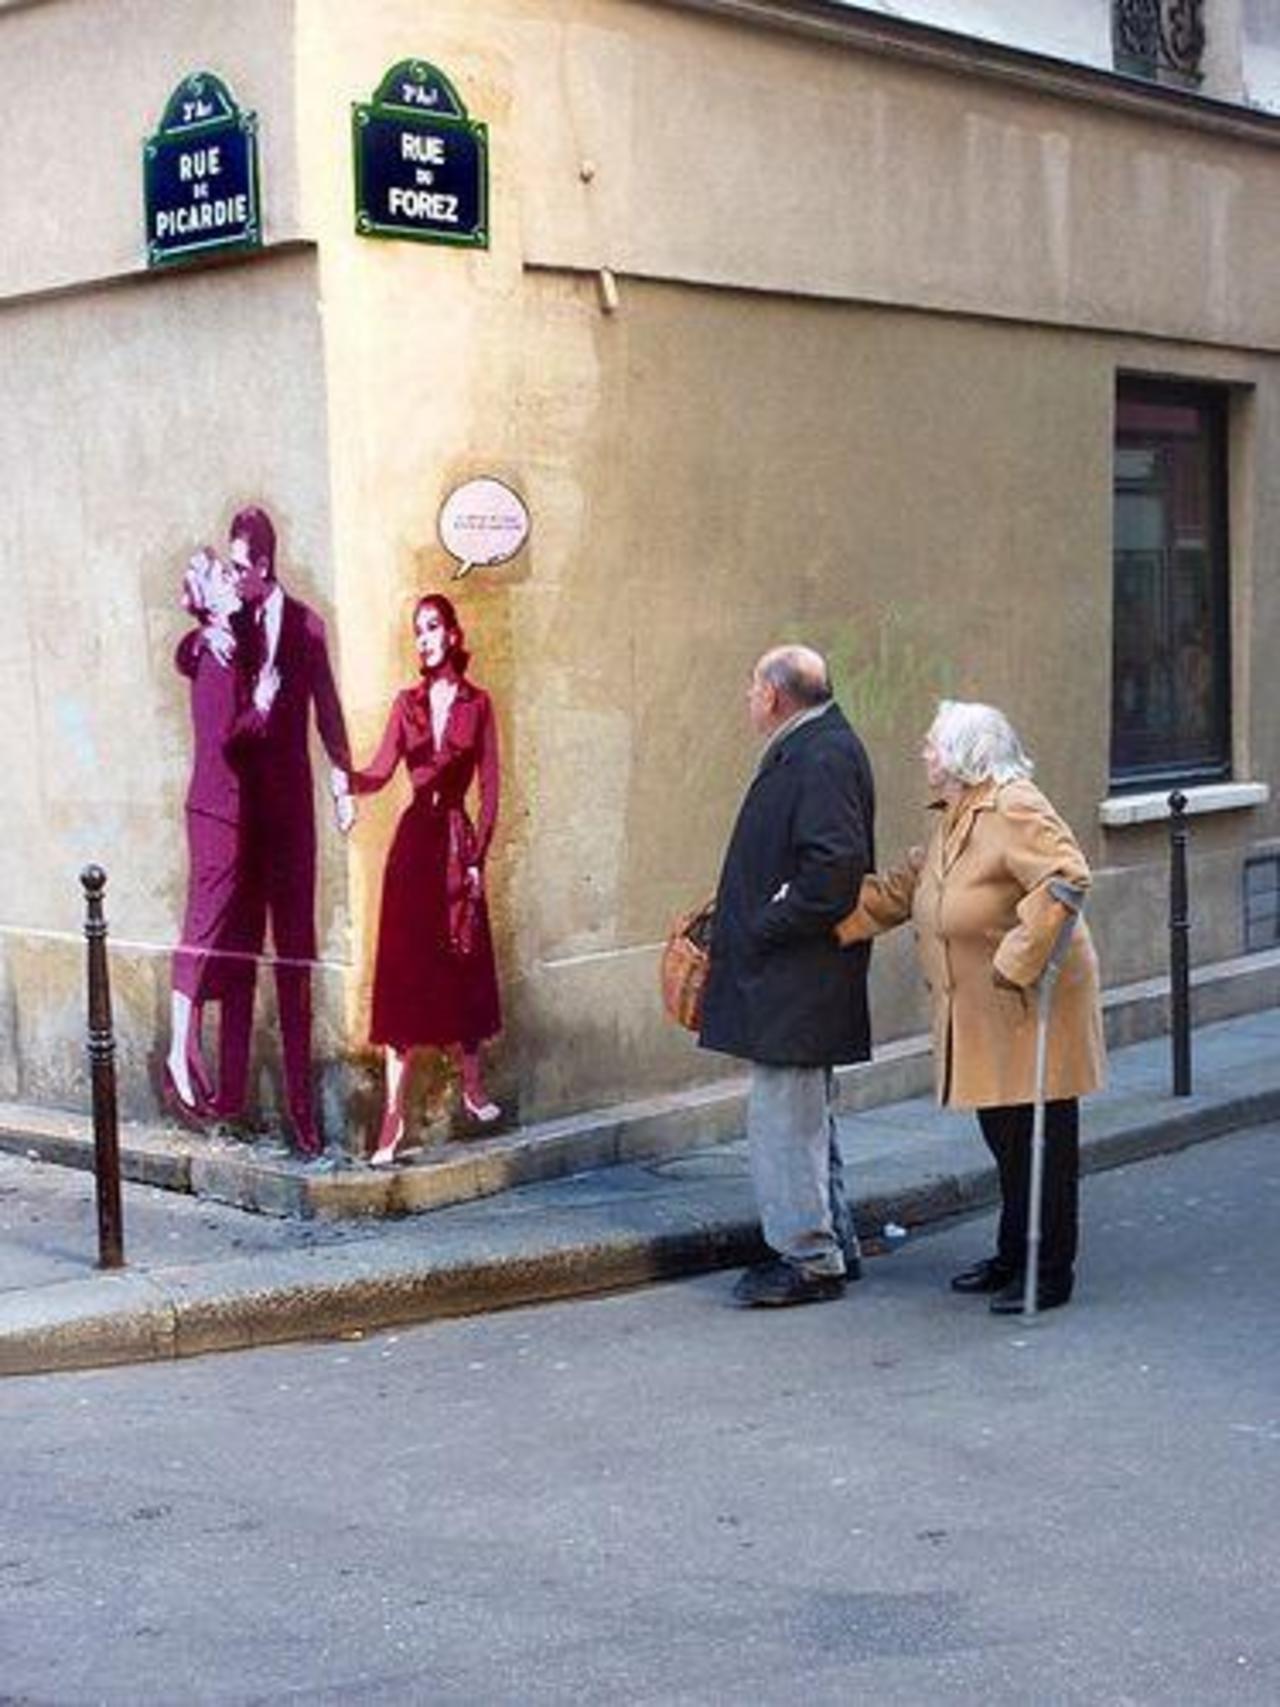 craigchek: #Paris et ses surprises ! #streetart #urbanart #graffiti  http://t.co/xtZiBAF9cF